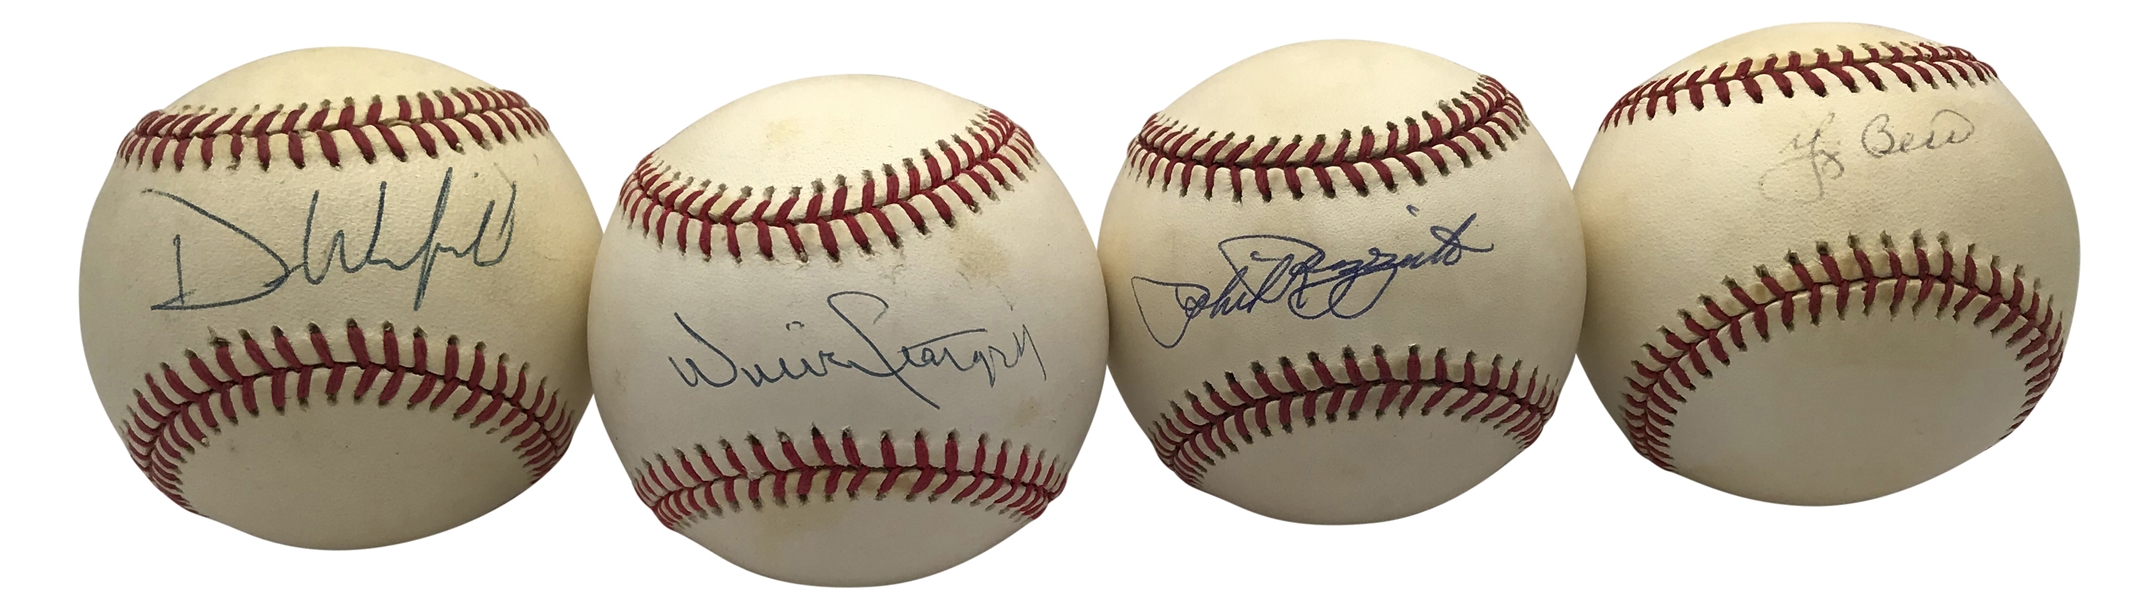 MLB Hitting Legends Lot of Seven (7) Single Signed Baseballs w/ Berra, Rizzuto, Stargell & Others! (Beckett/BAS Guaranteed)